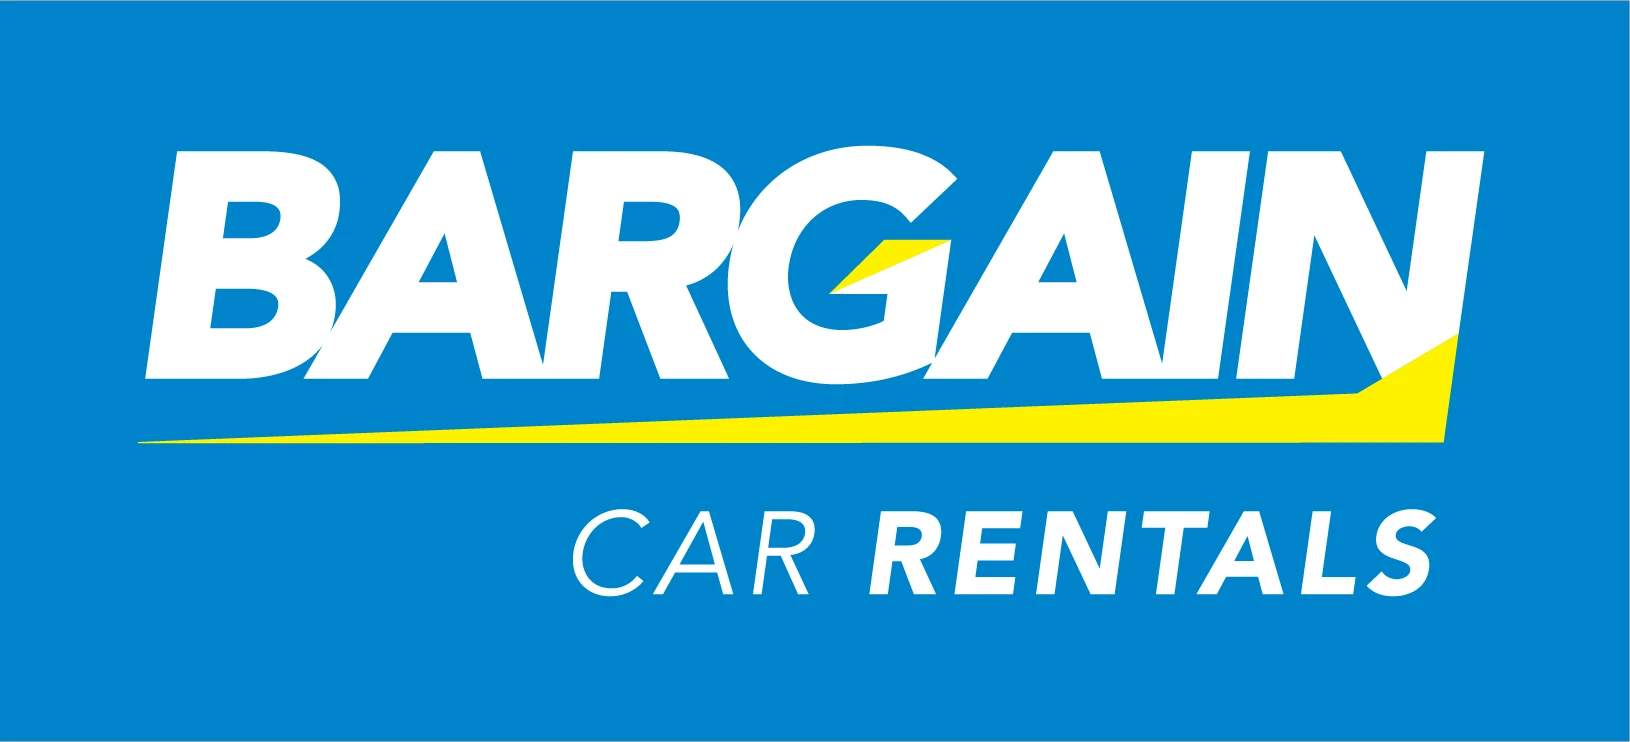  Bargain Car Rentals promo code